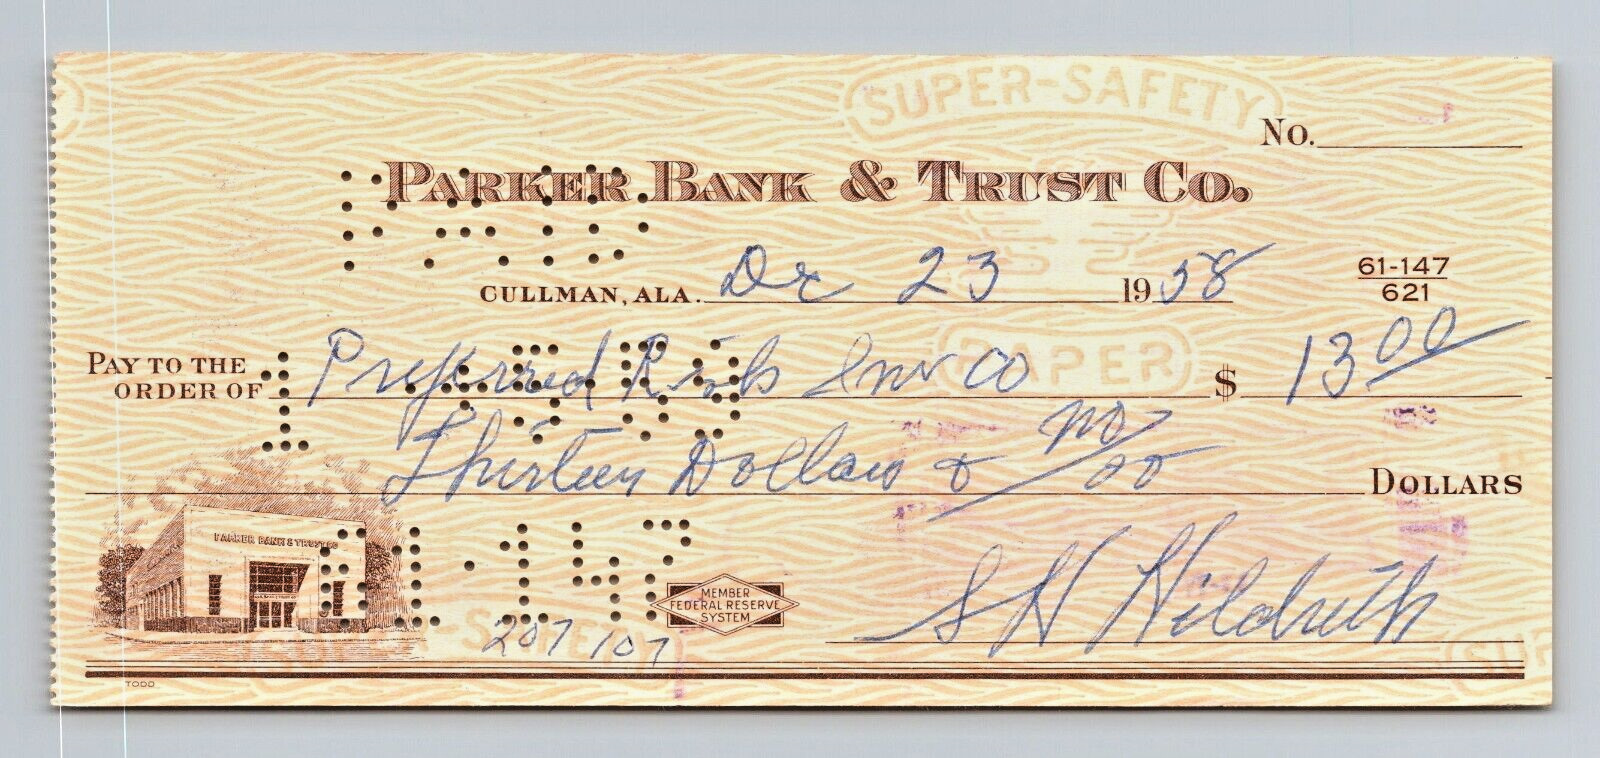 Vintage 1958 cancelled check PARKER BANK & TRUST CO. Cullman, Alabama